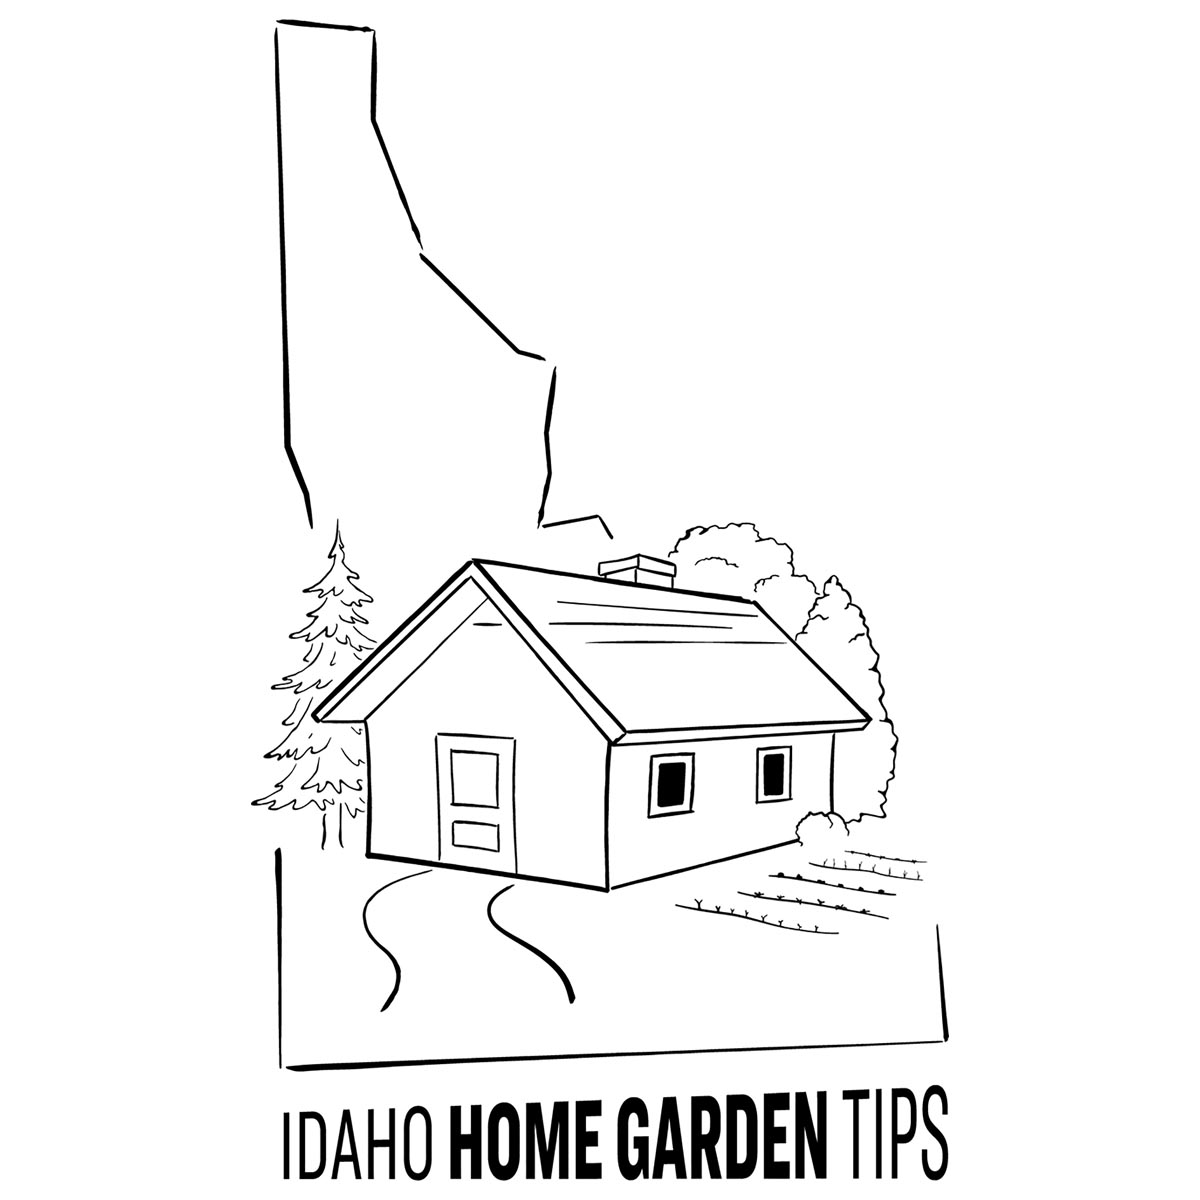 Black and white Idaho home garden tips graphic.